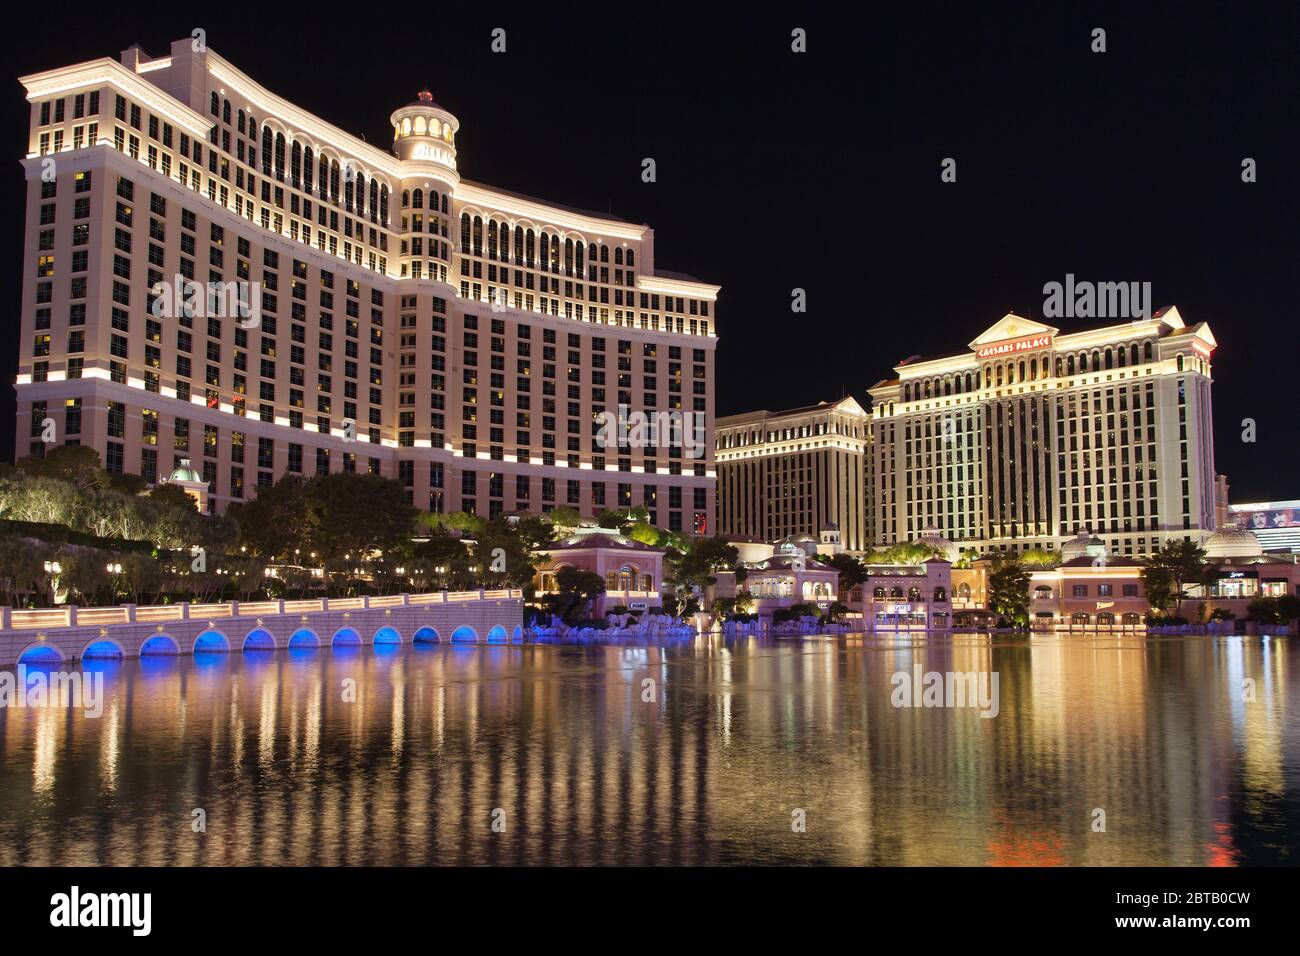 Las Vegas, Nevada - August 29, 2019: Bellagio and Caesars Palace Hotels at night in Las Vegas, Nevada, United States. Stock Photo